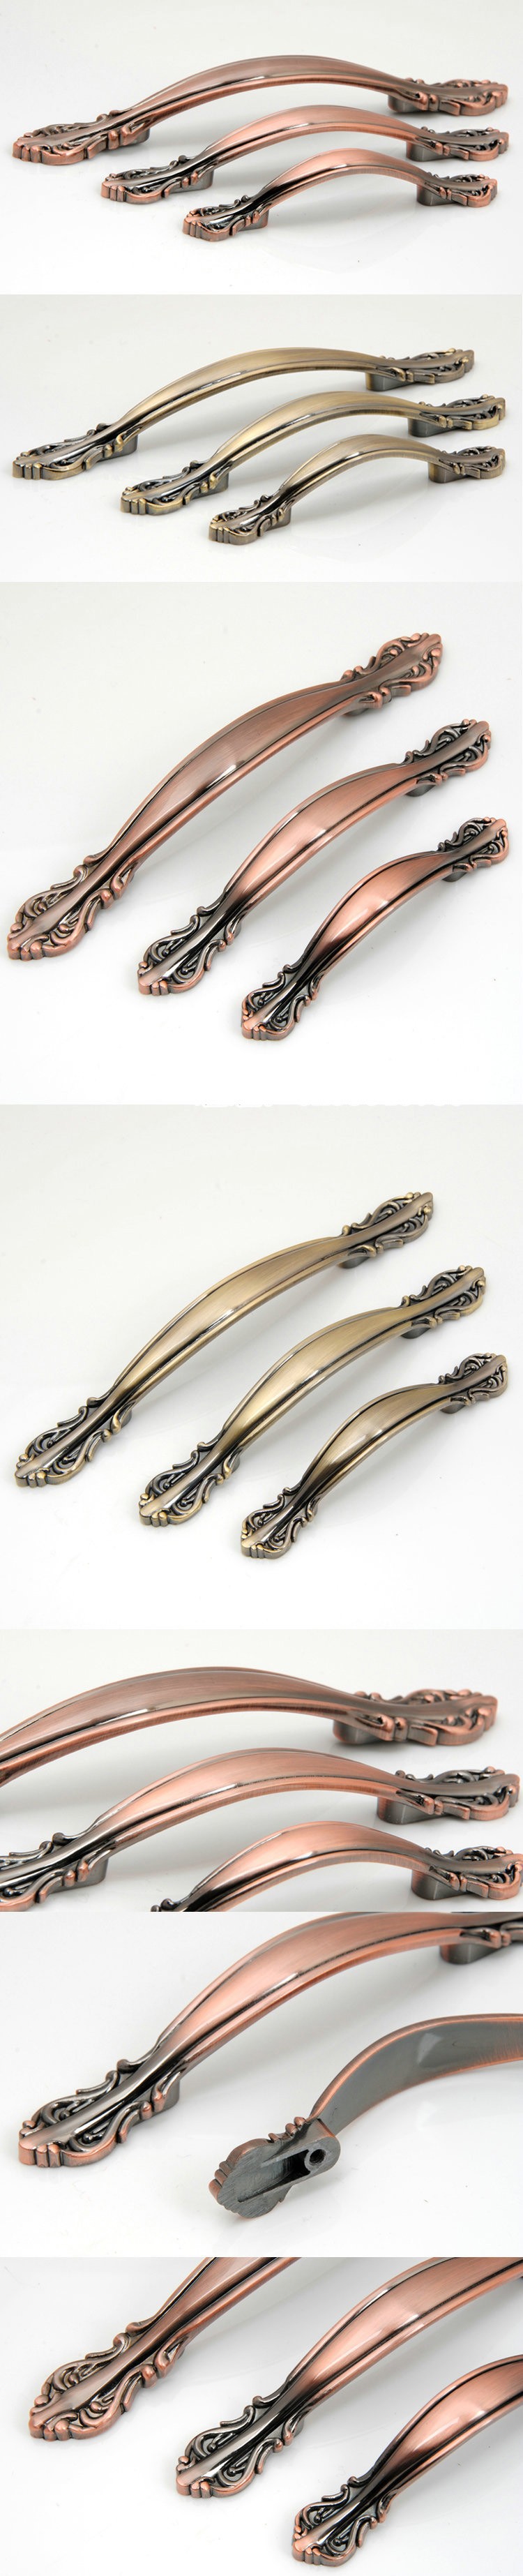 64mm Antique copper door handles and knobs/ drawer pulls &knobs